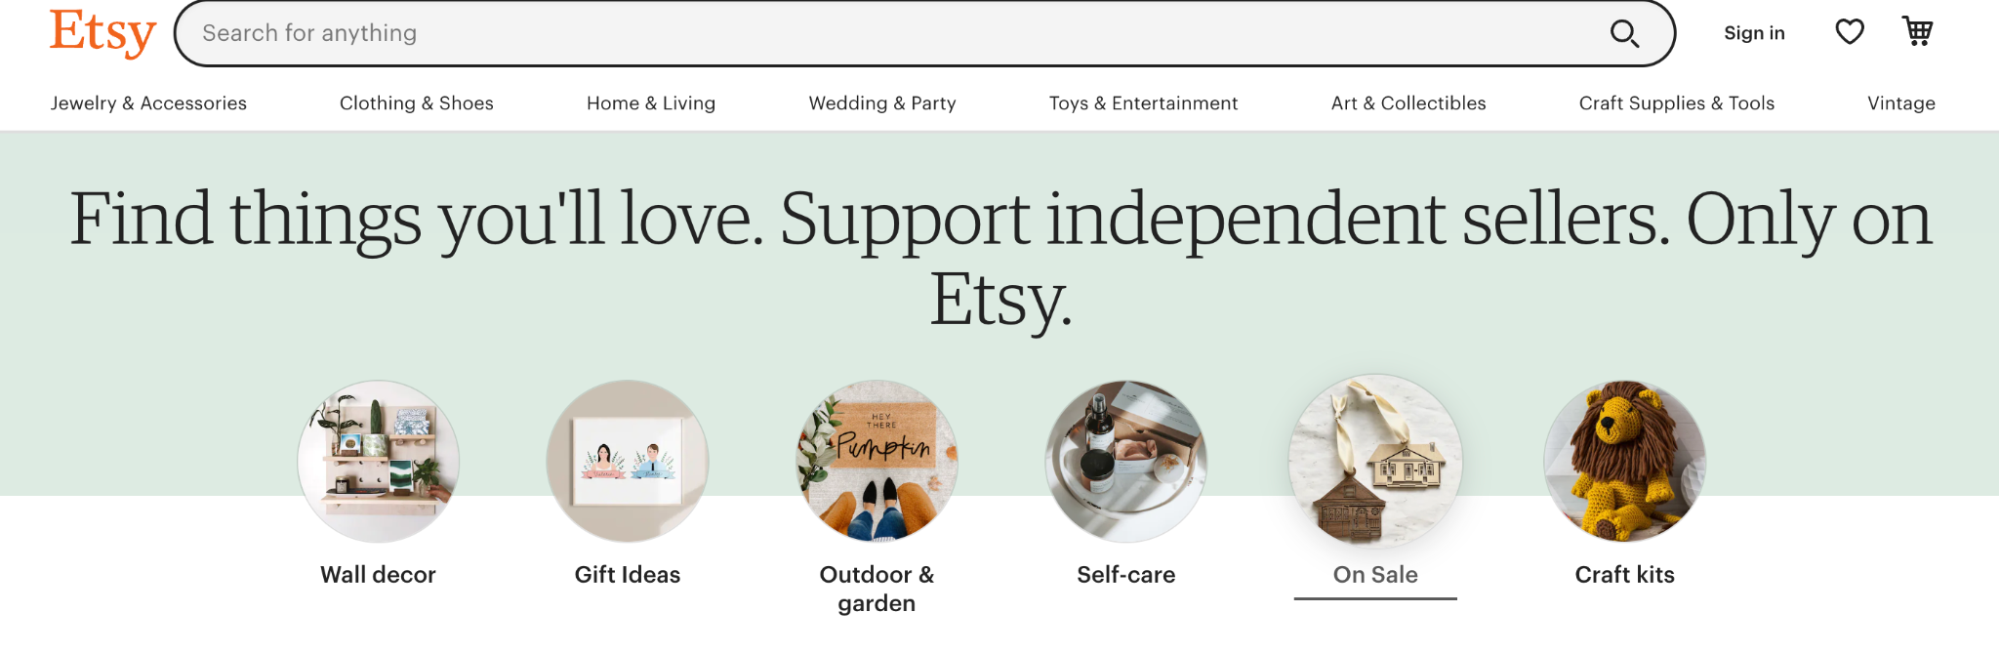 etsy homepage